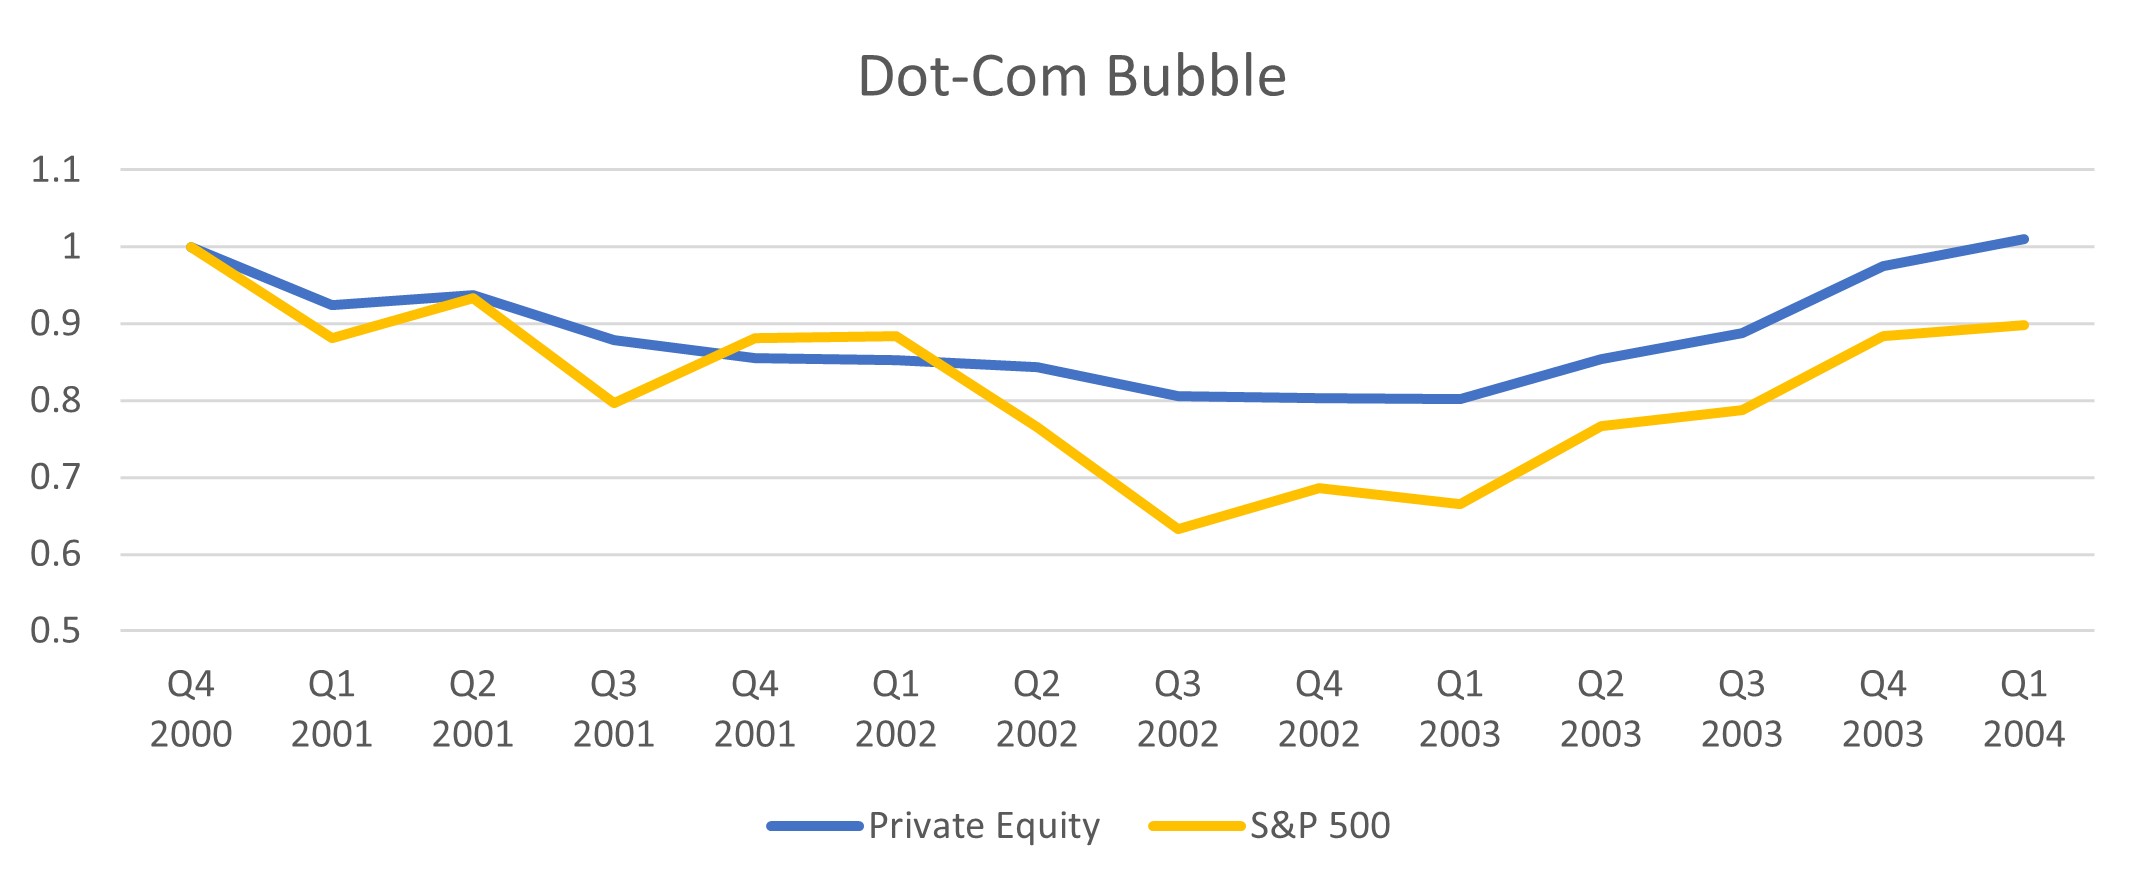 Dot-com bubble